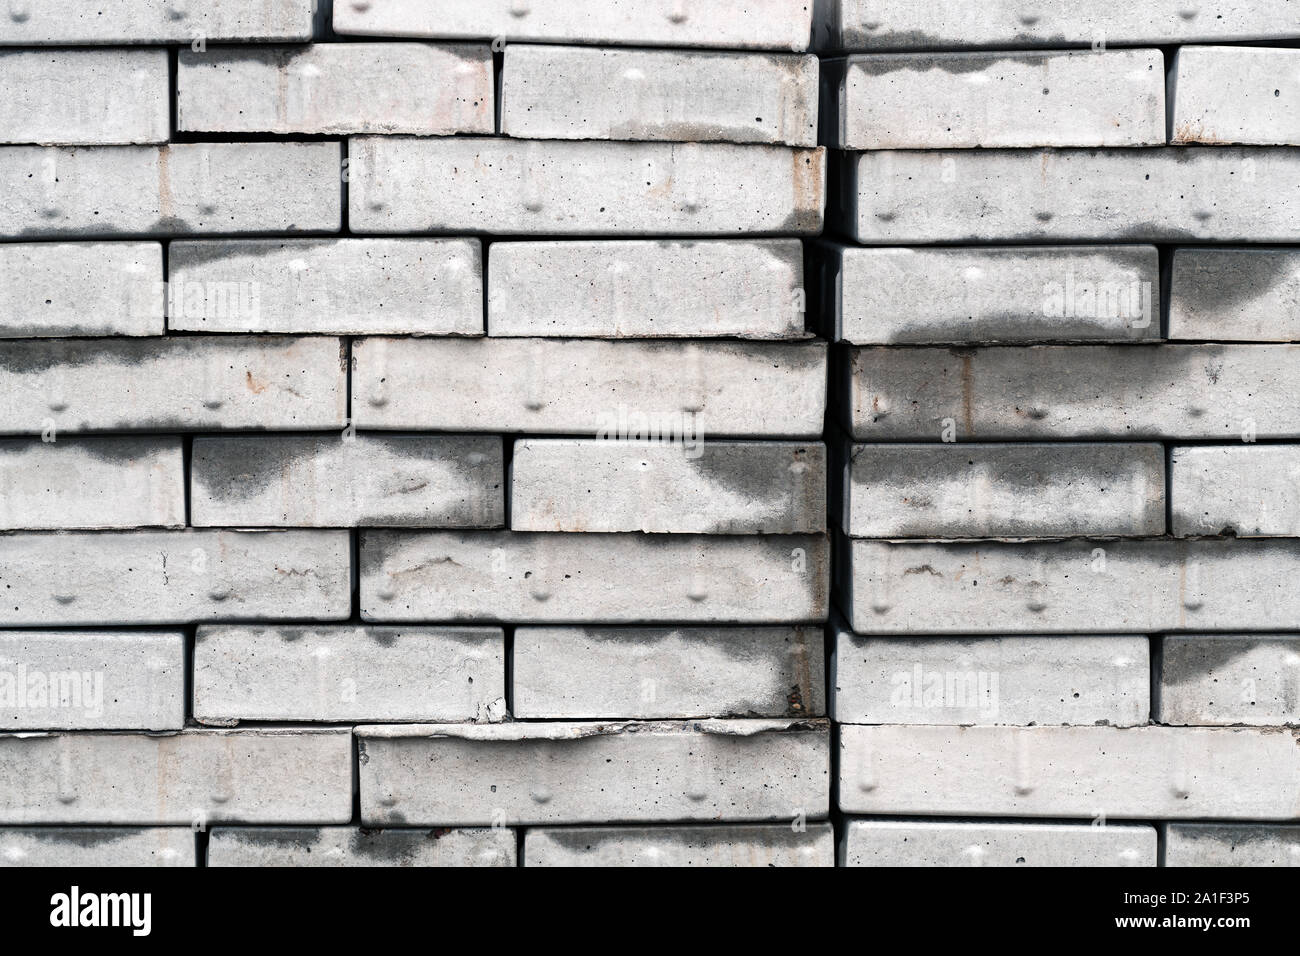 Stapel der zementierten Beton Ziegel Bauindustrie Material Stockfoto